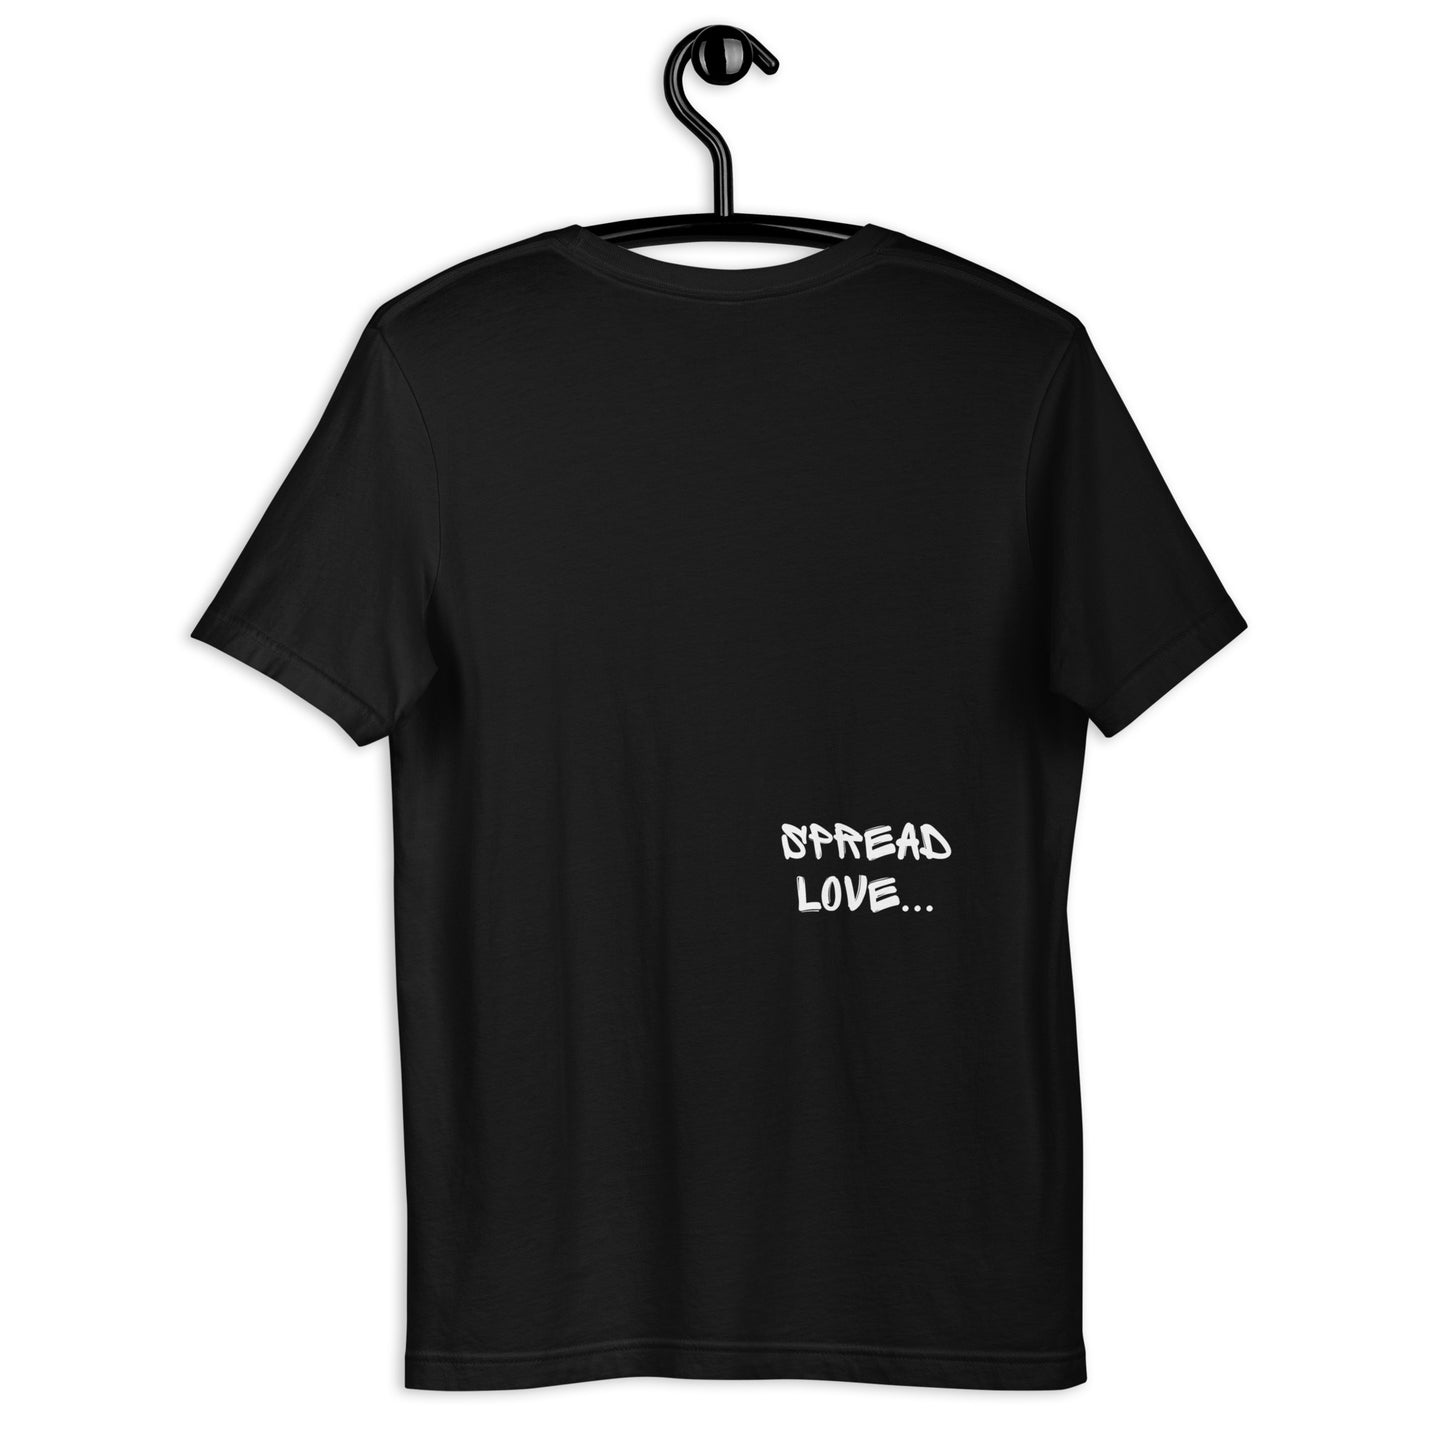 Spread Love Shirt